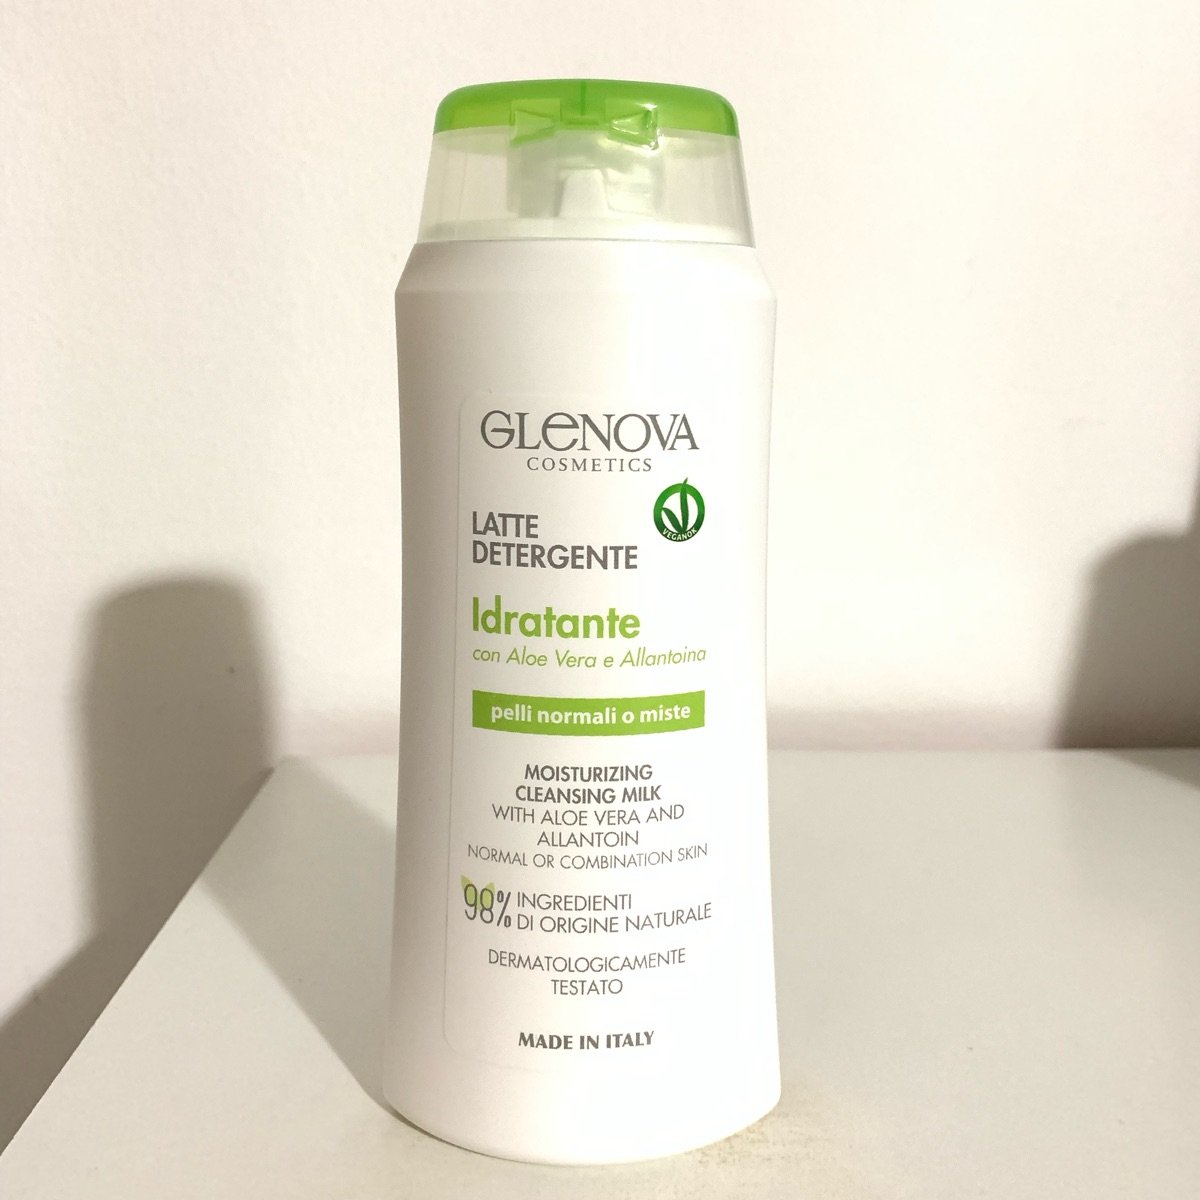 Glenova Cosmetics Latte Detergente Reviews | abillion